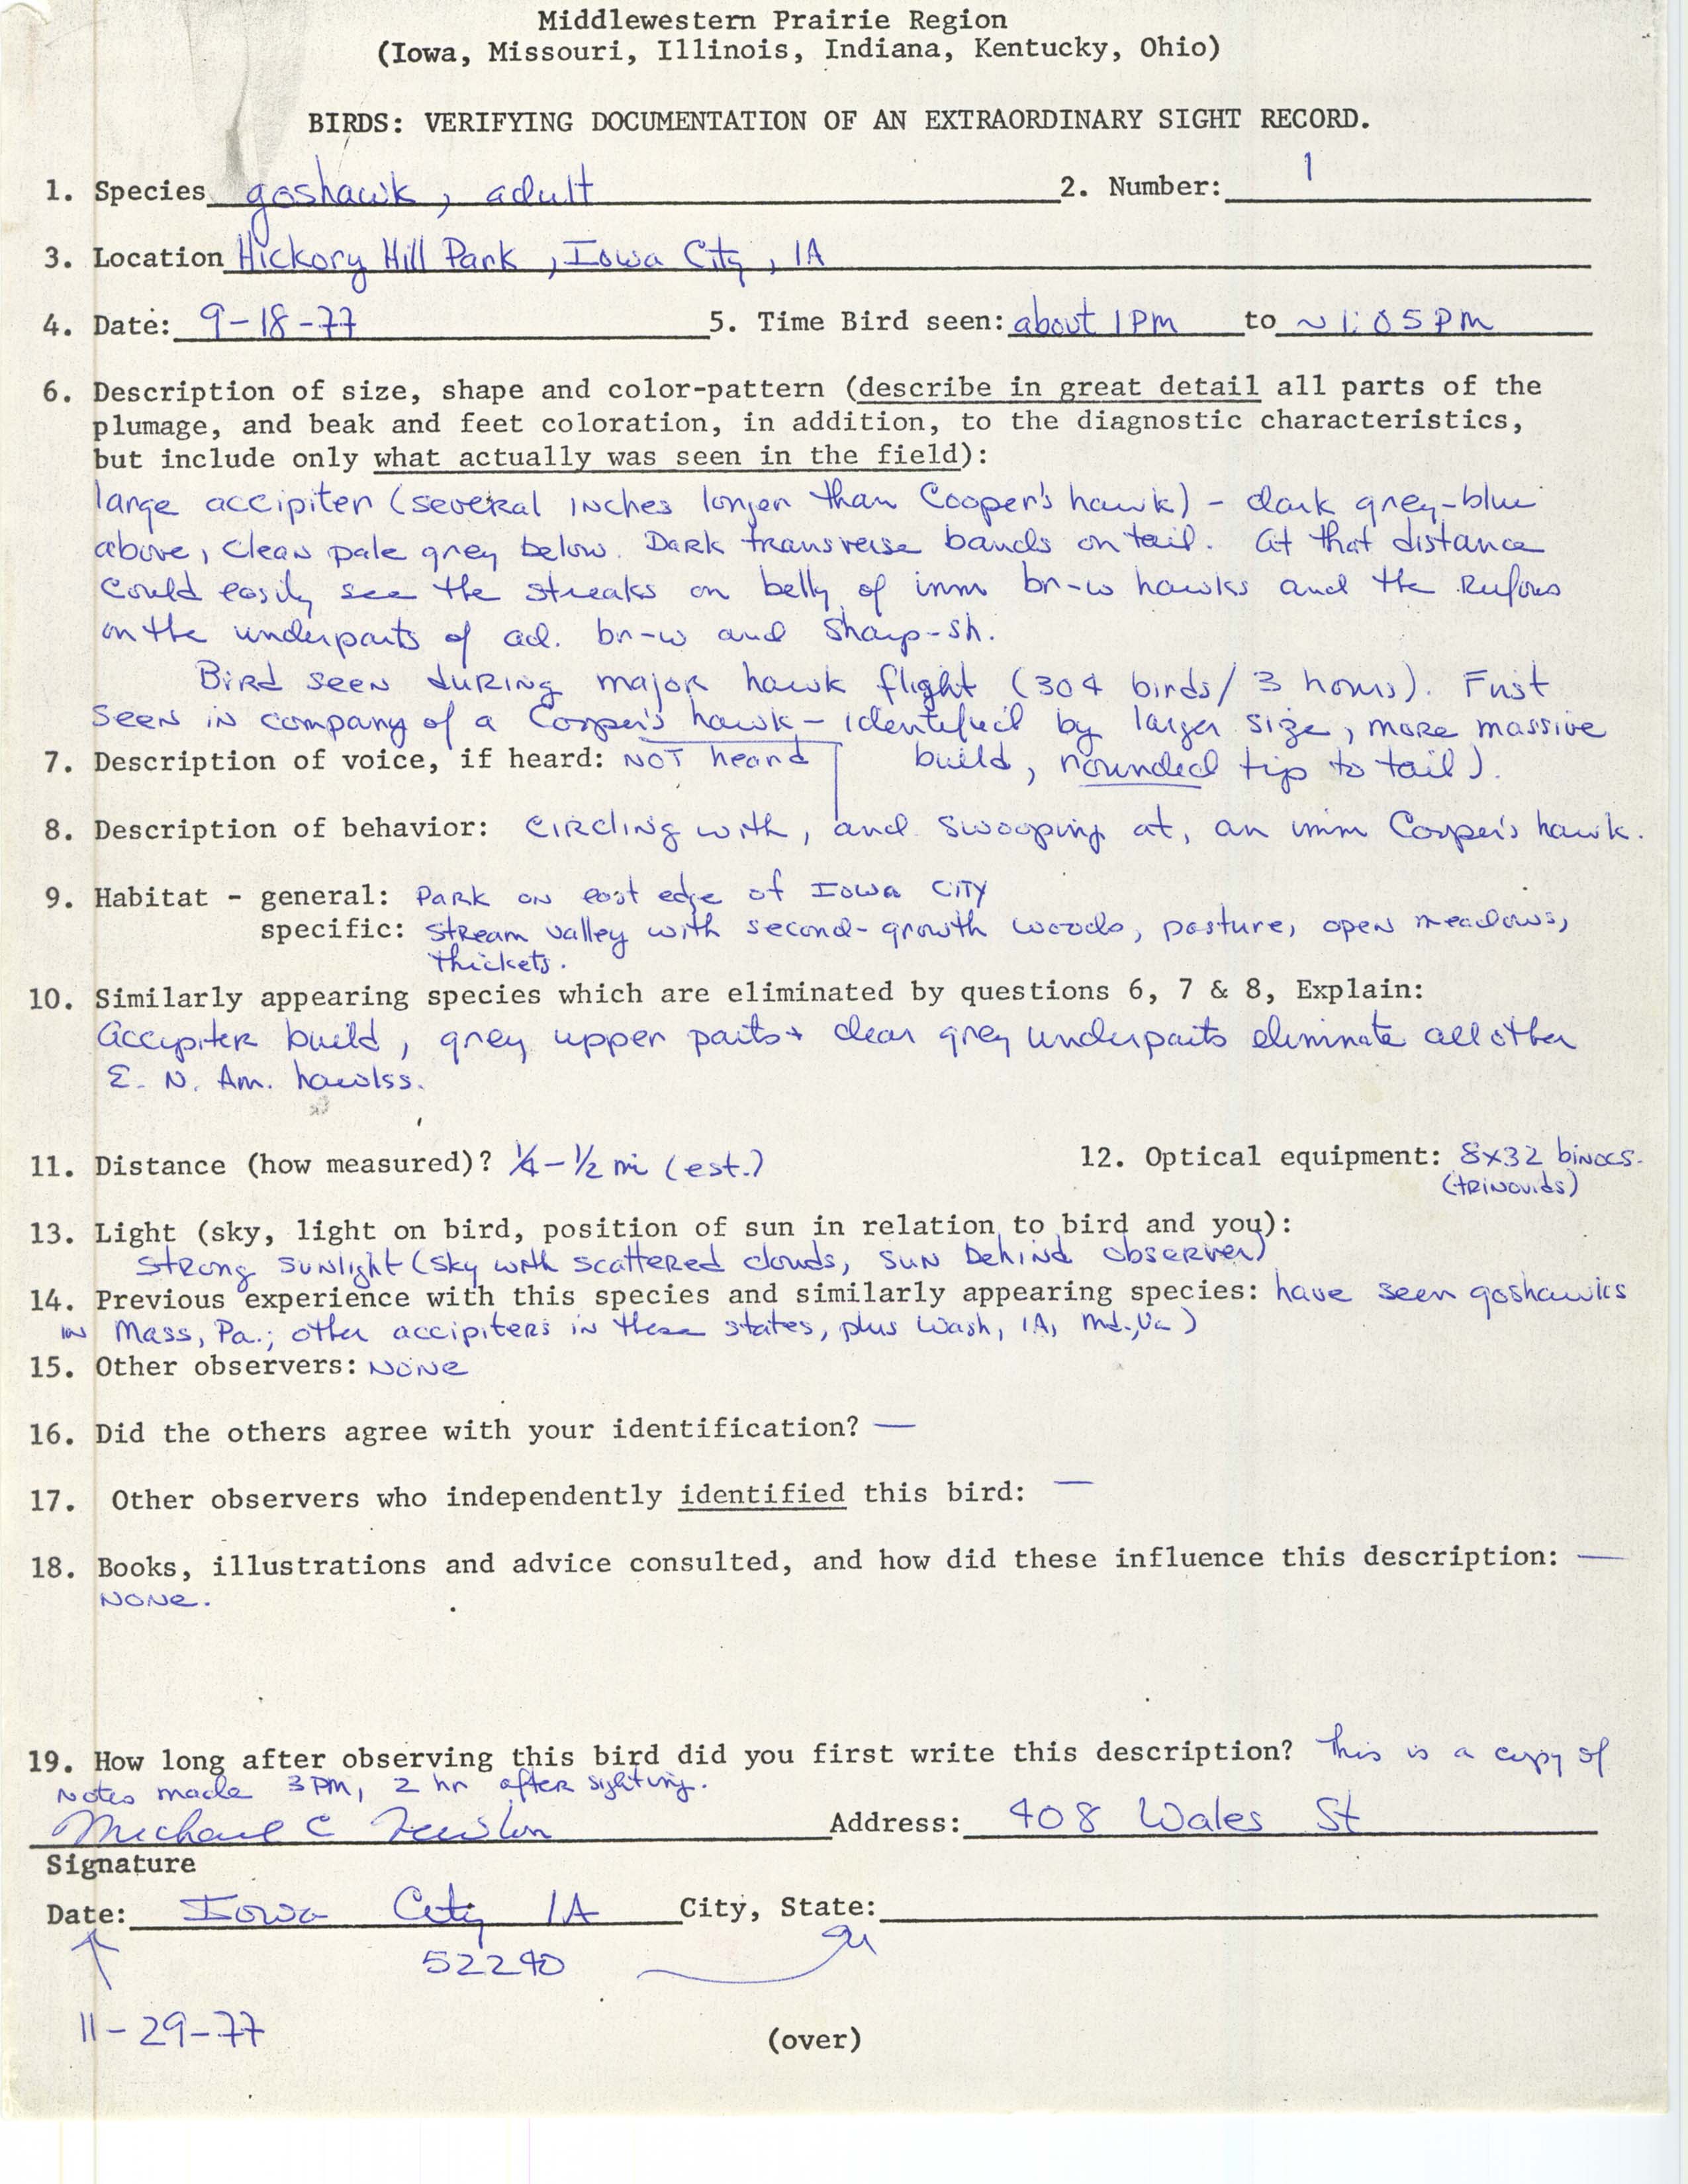 Rare bird documentation form for Northern Goshawk at Hickory Hill Park, 1977